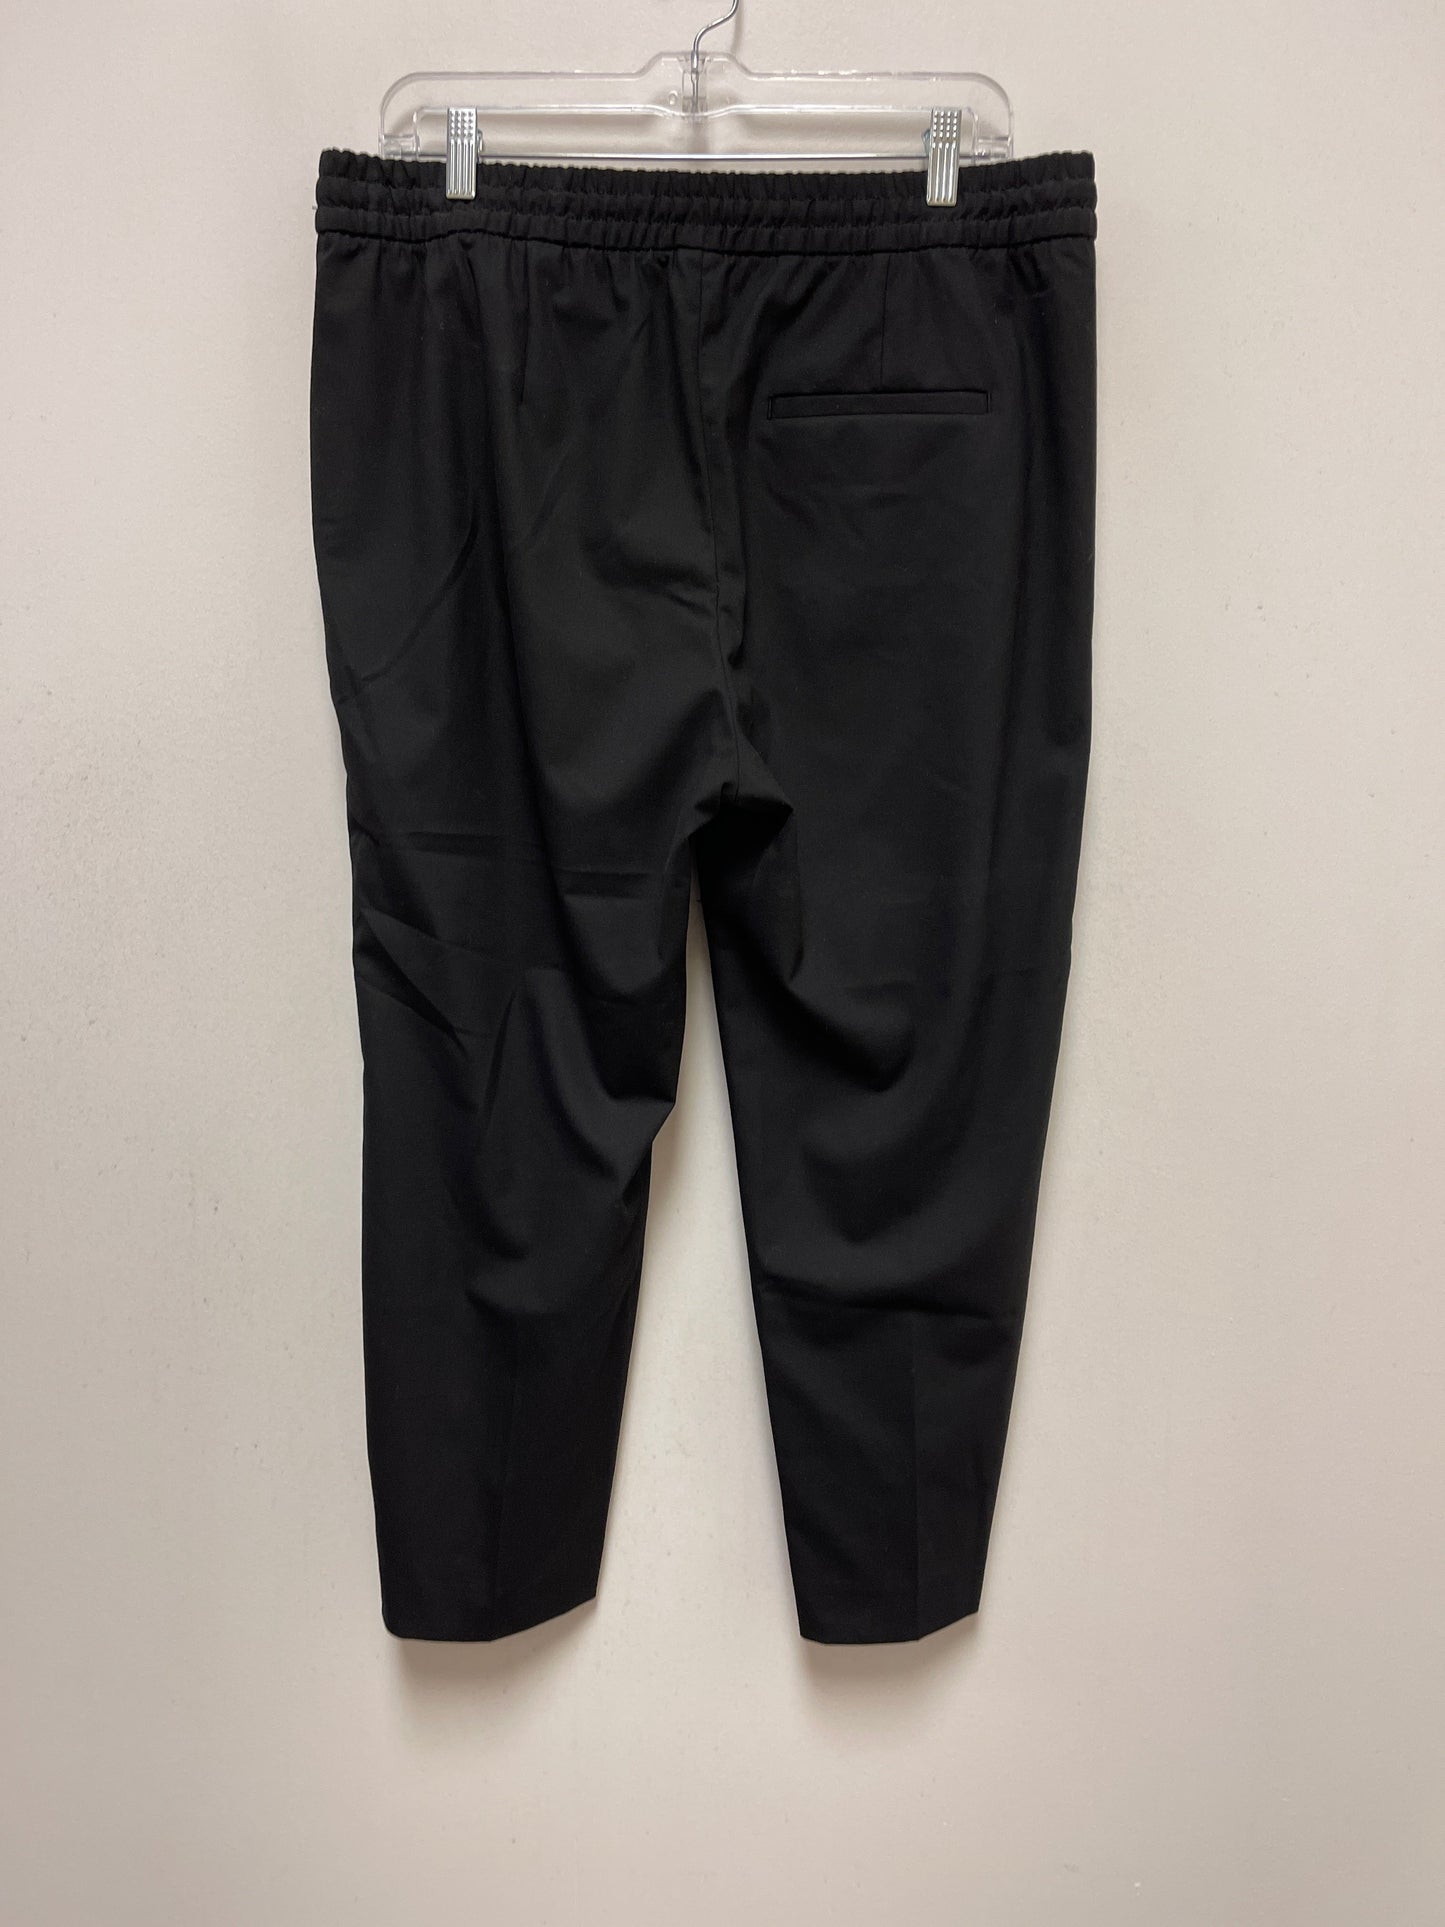 Black Pants Other Gap, Size 14